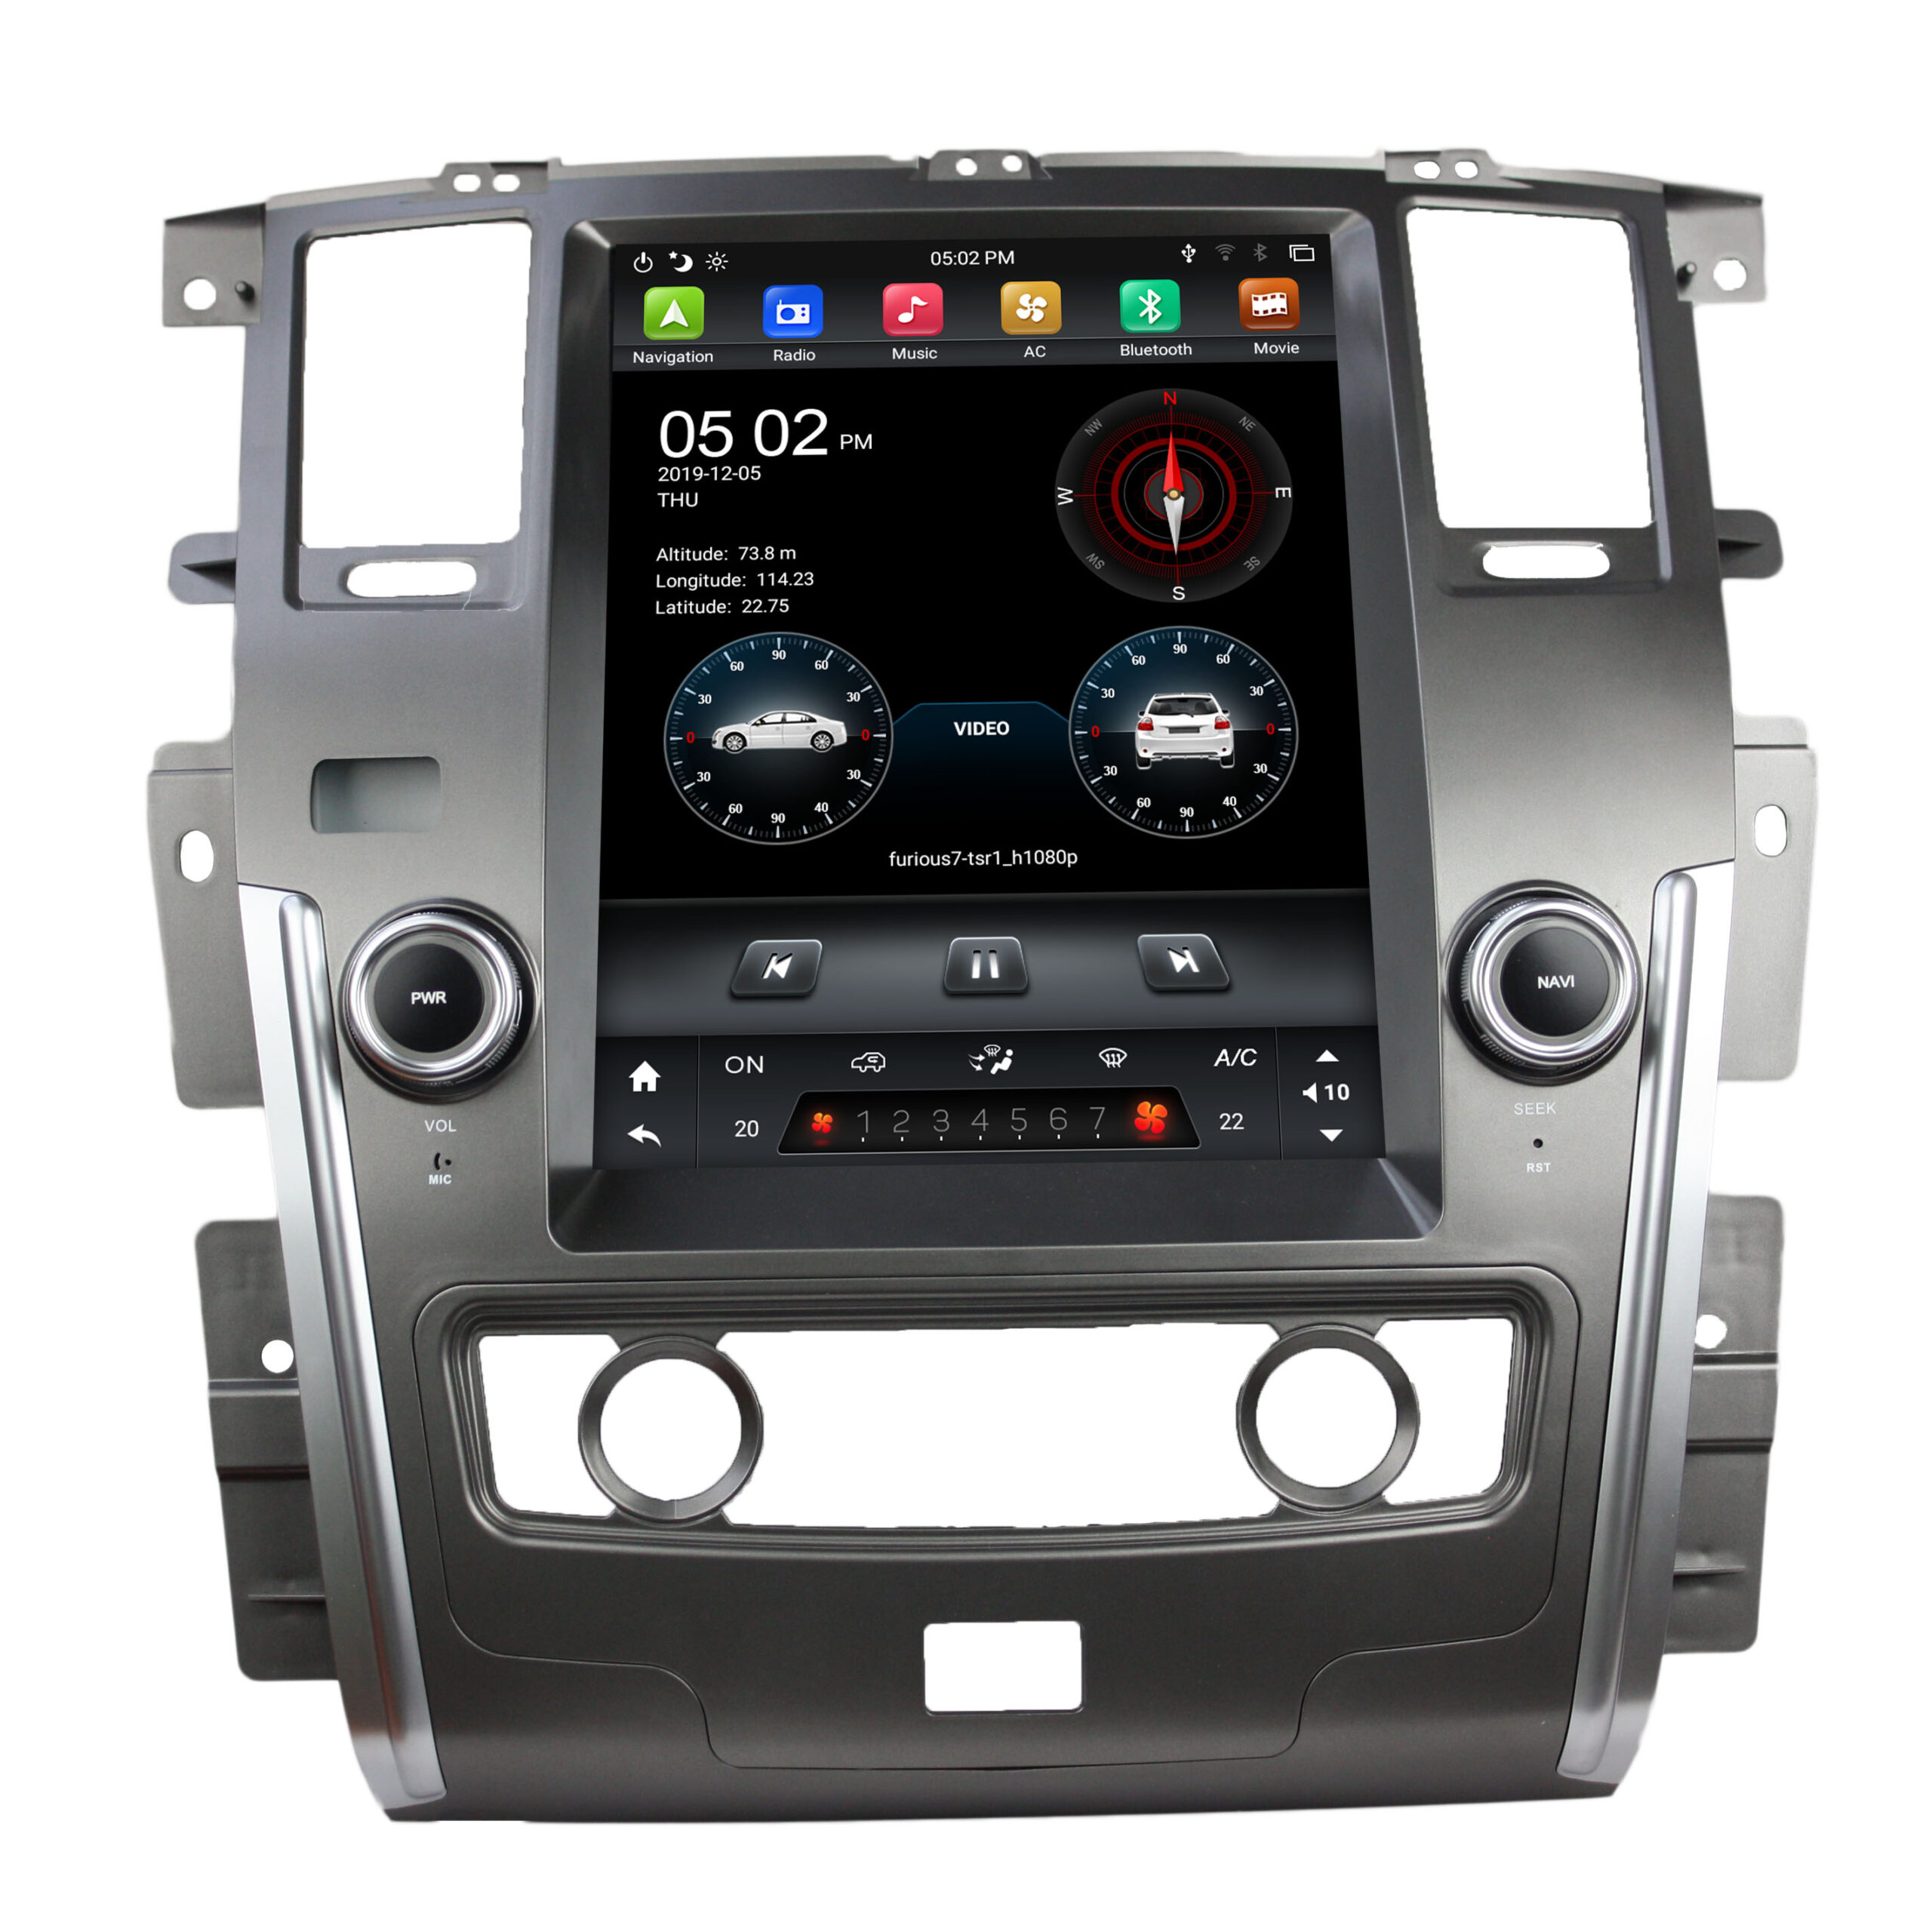 KD-12125 Car Navigation Player stereo for Patrol 2013-2017 (M/C)